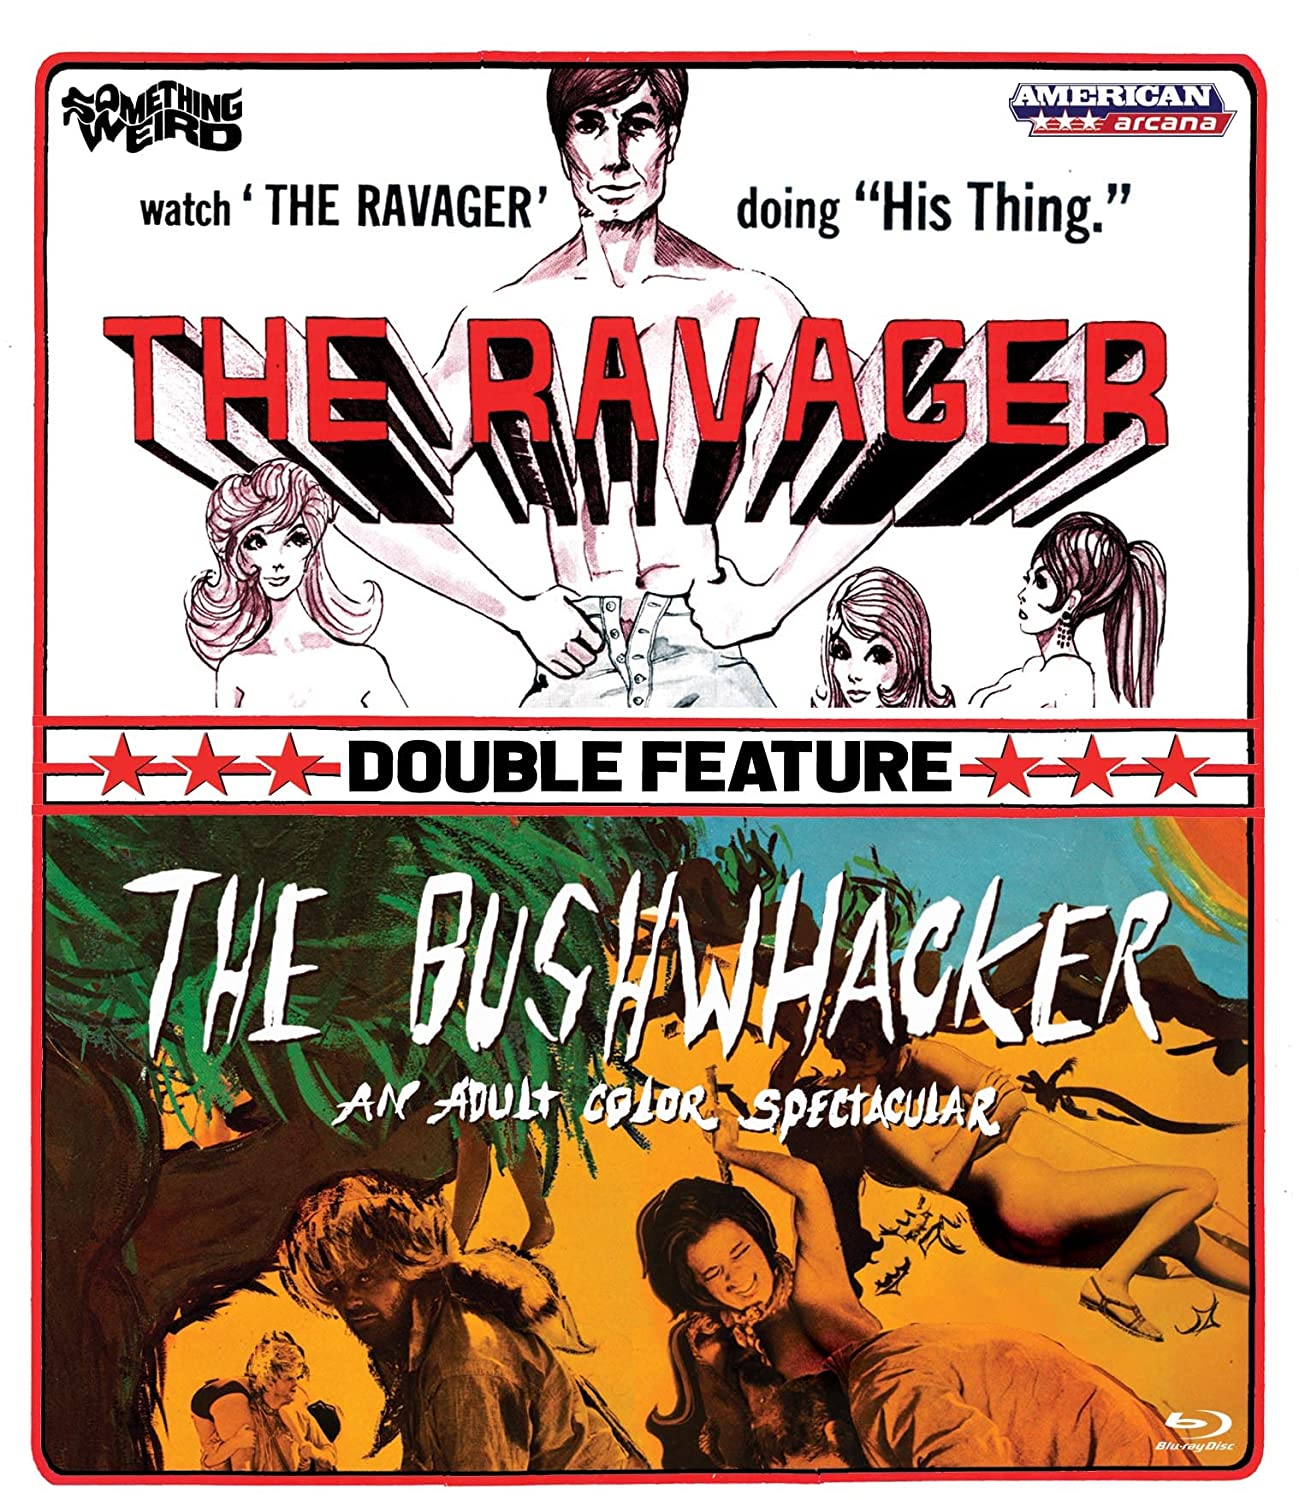 THE RAVAGER / THE BUSHWACKER BLU-RAY